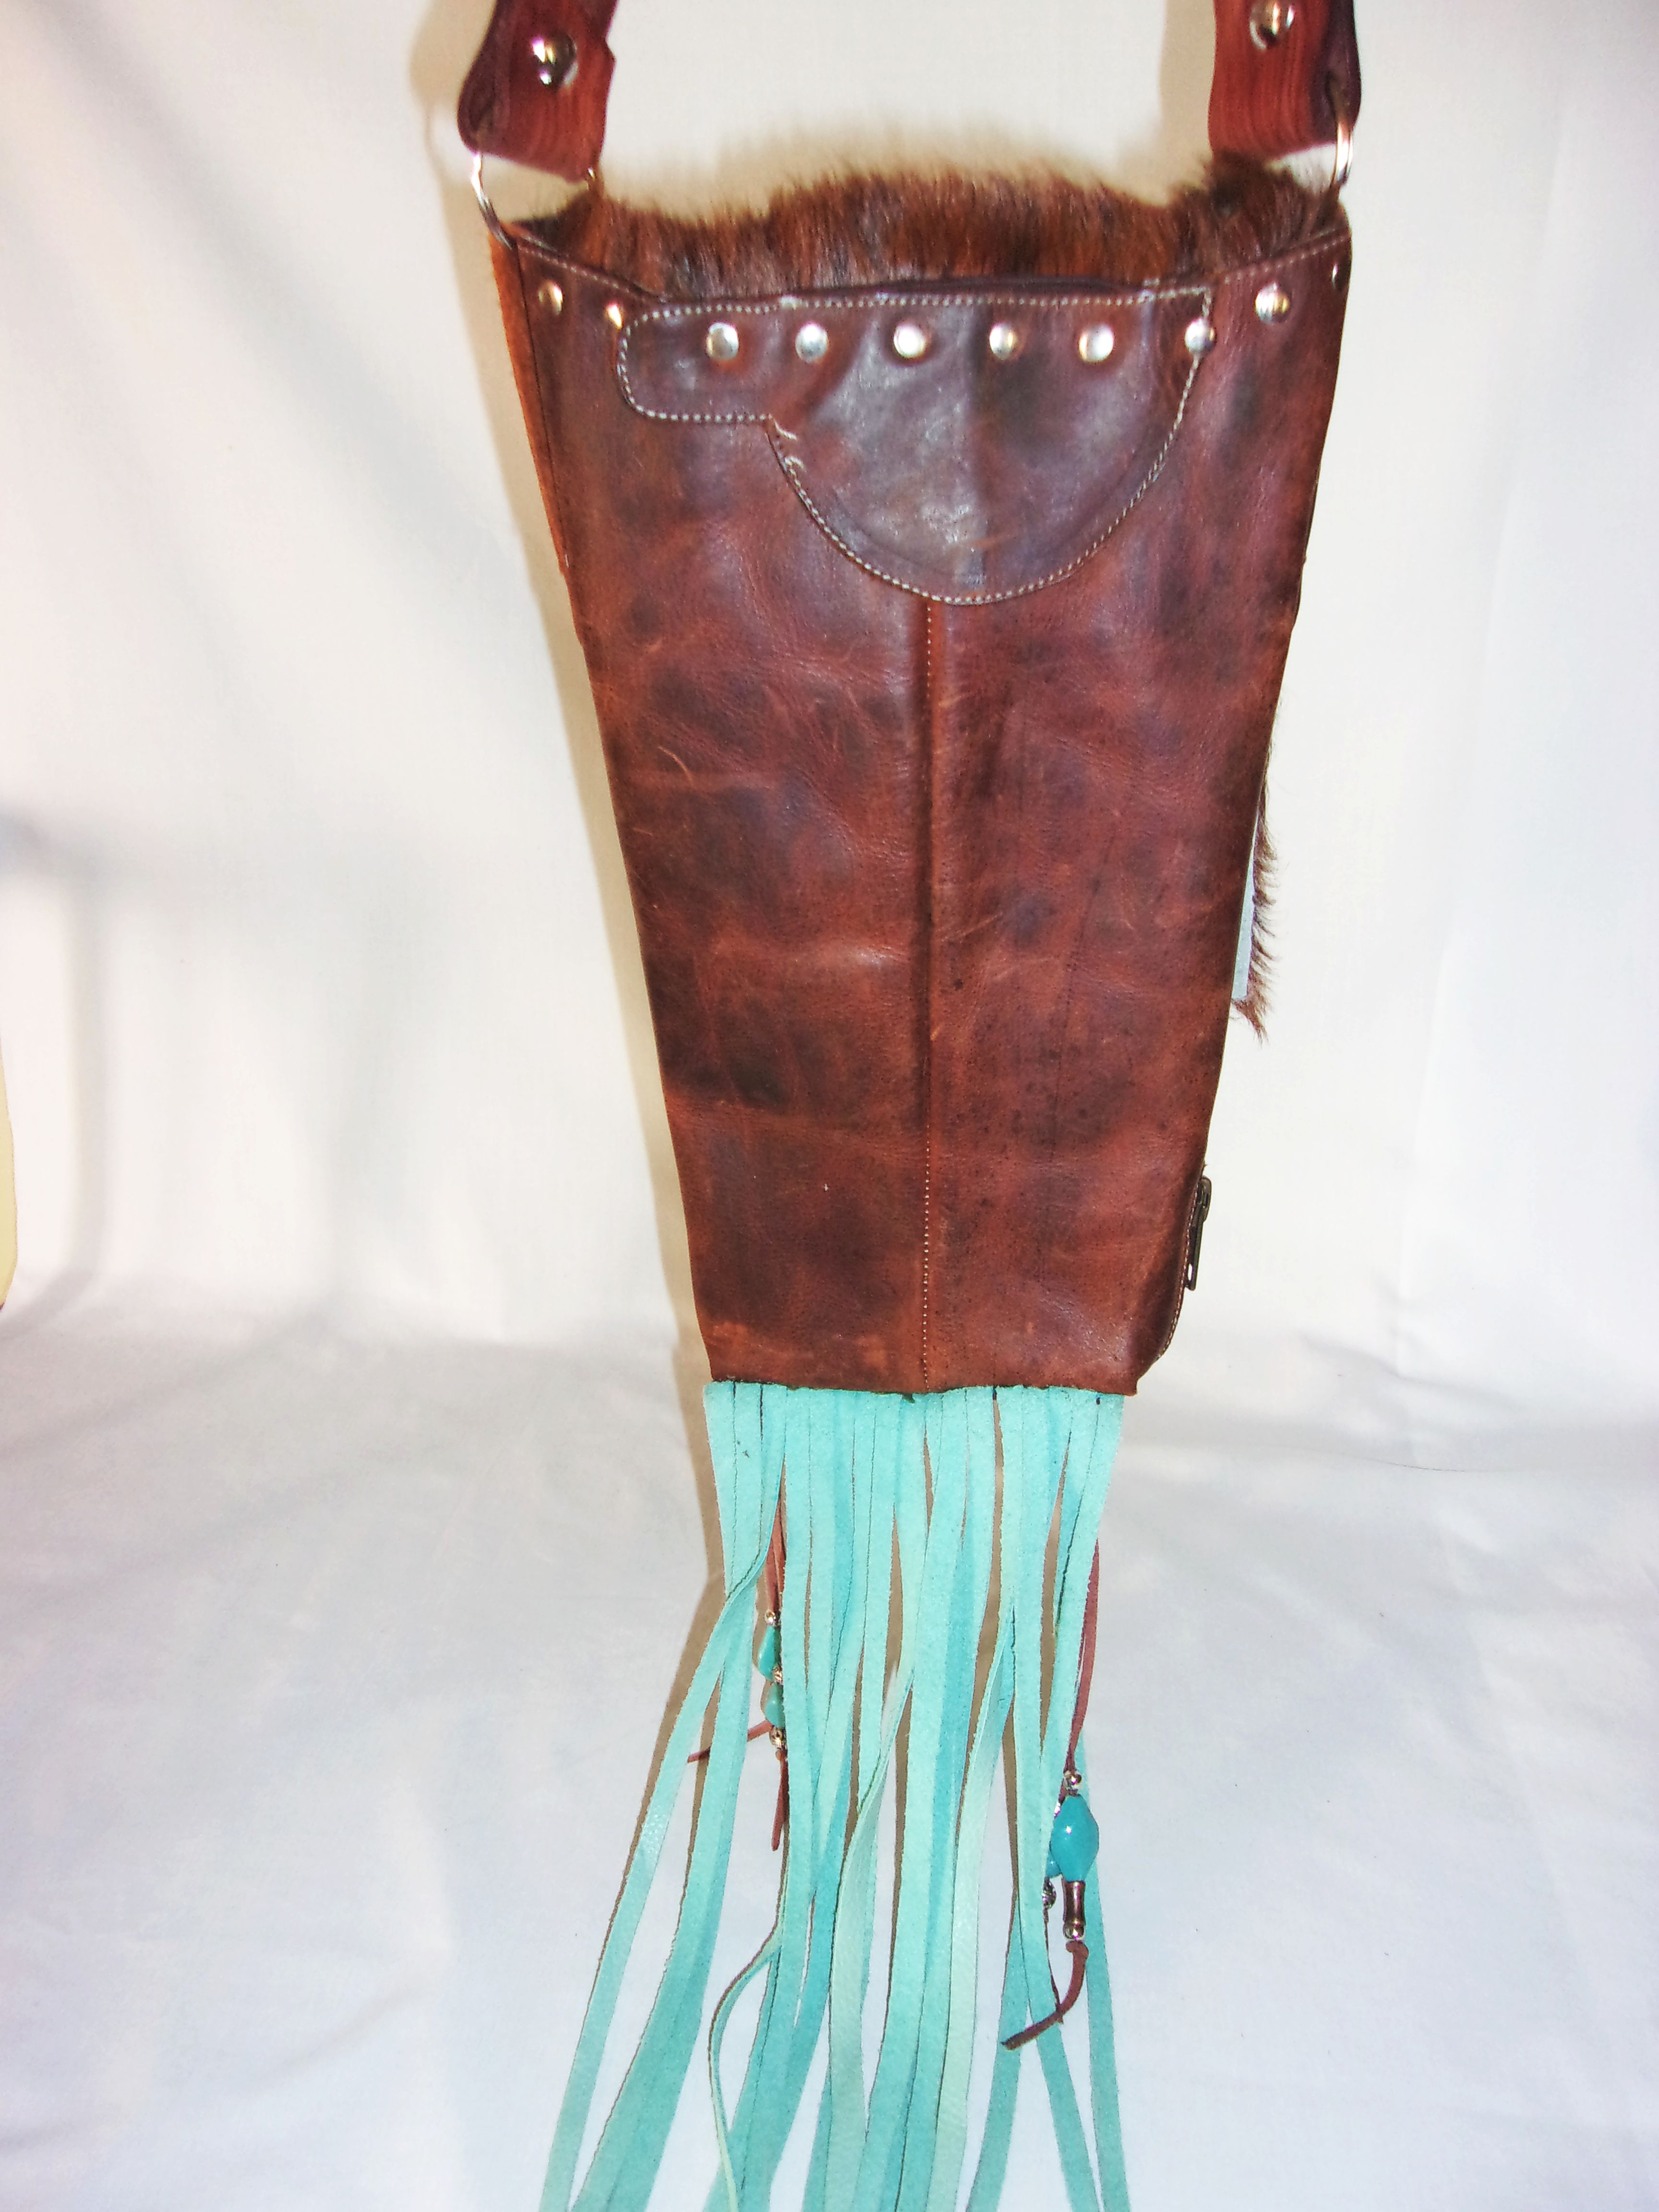 Hair on Hide Purse - Cowboy Boot Purse - Cowhide Purse - Western Boho Purse HH33 cowboy boot purses, western fringe purse, handmade leather purses, boot purse, handmade western purse, custom leather handbags Chris Thompson Bags